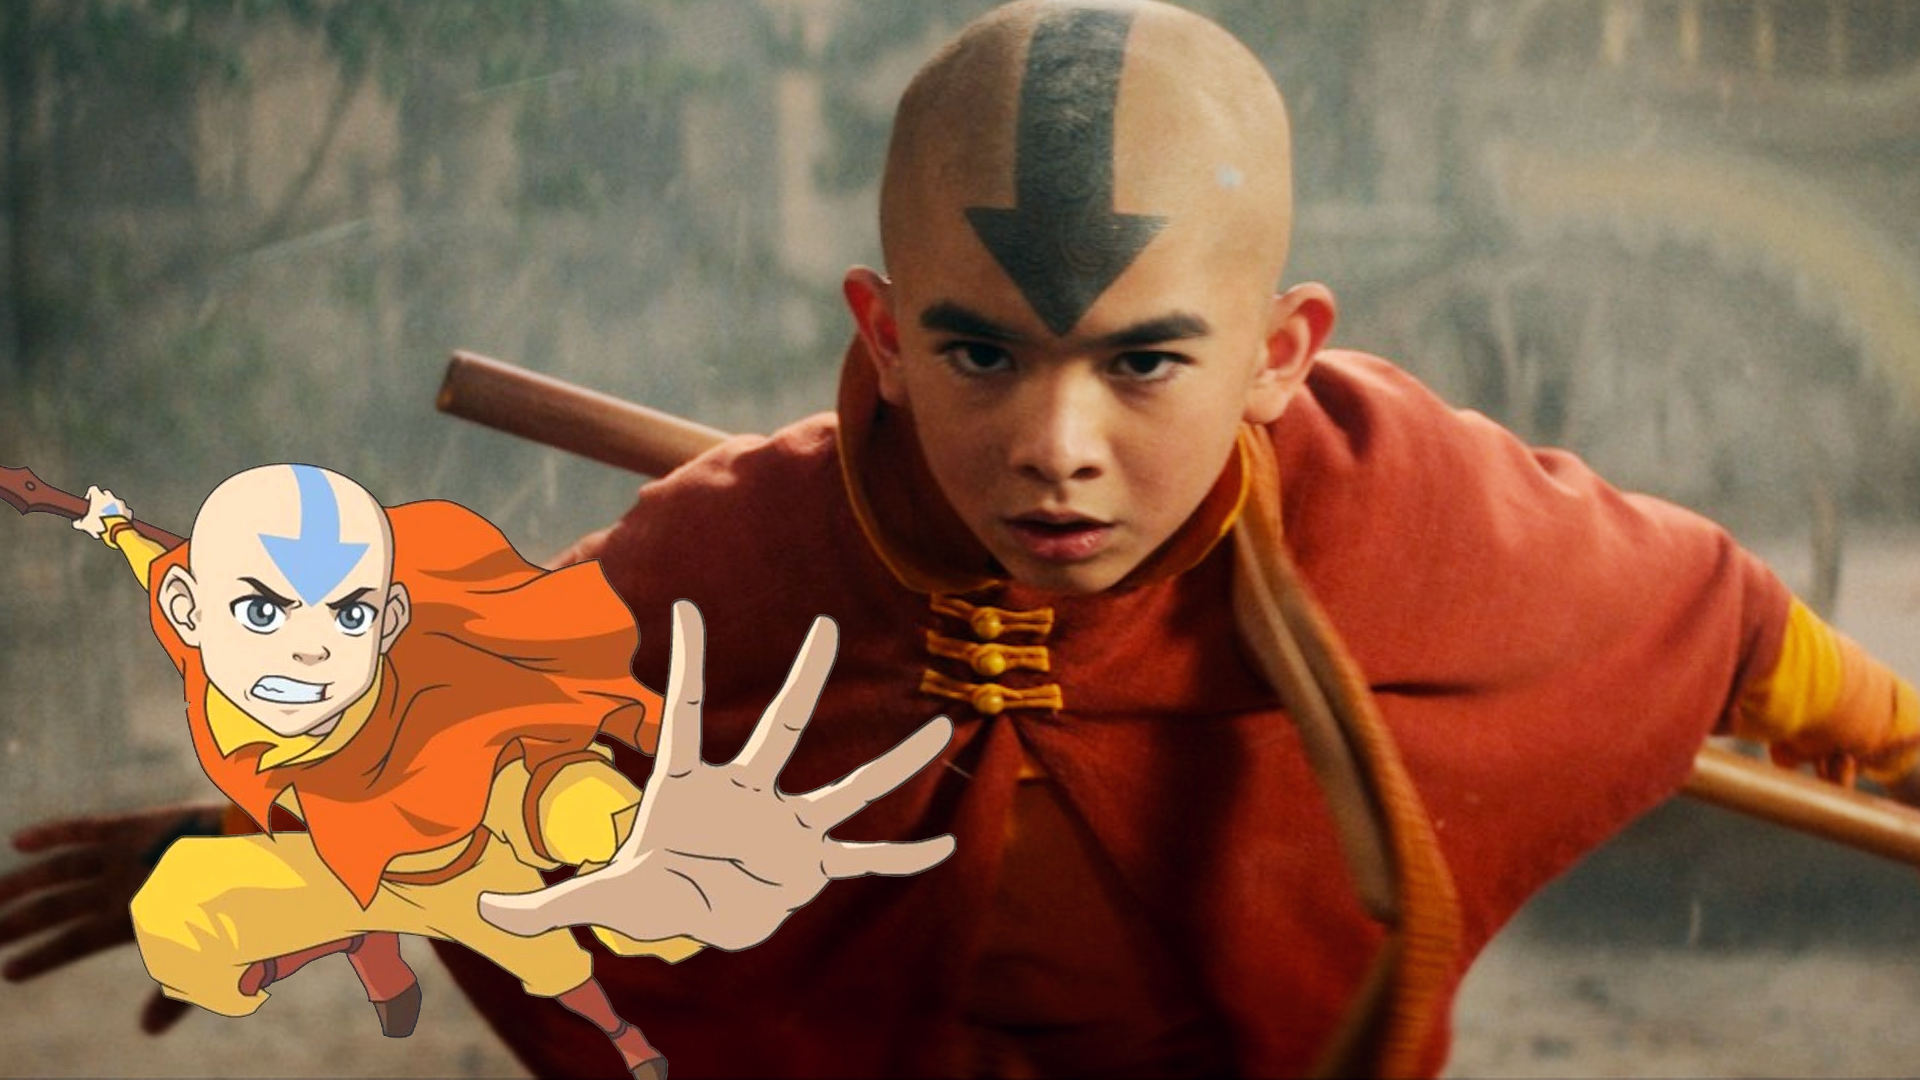 Imagem de Gordon Cormier como Aang ao lado da versão animada de Aang